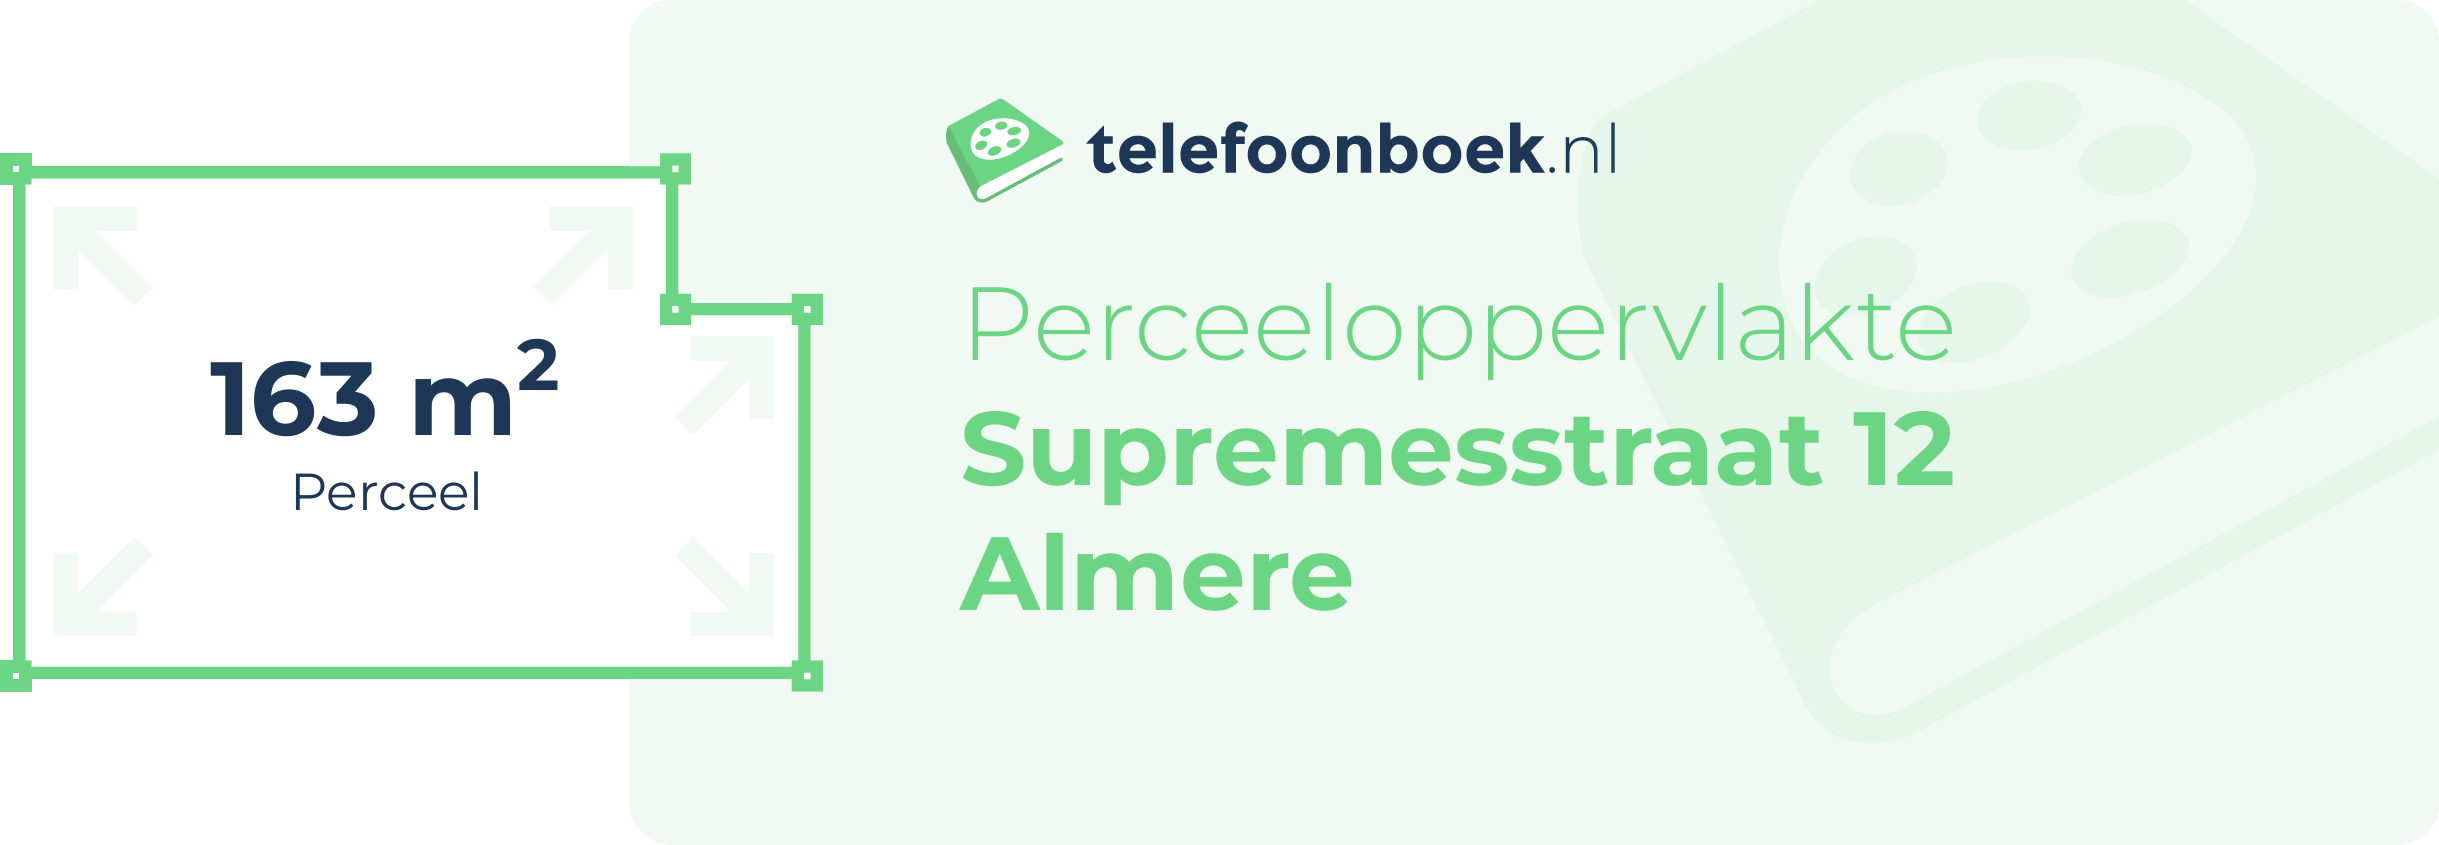 Perceeloppervlakte Supremesstraat 12 Almere